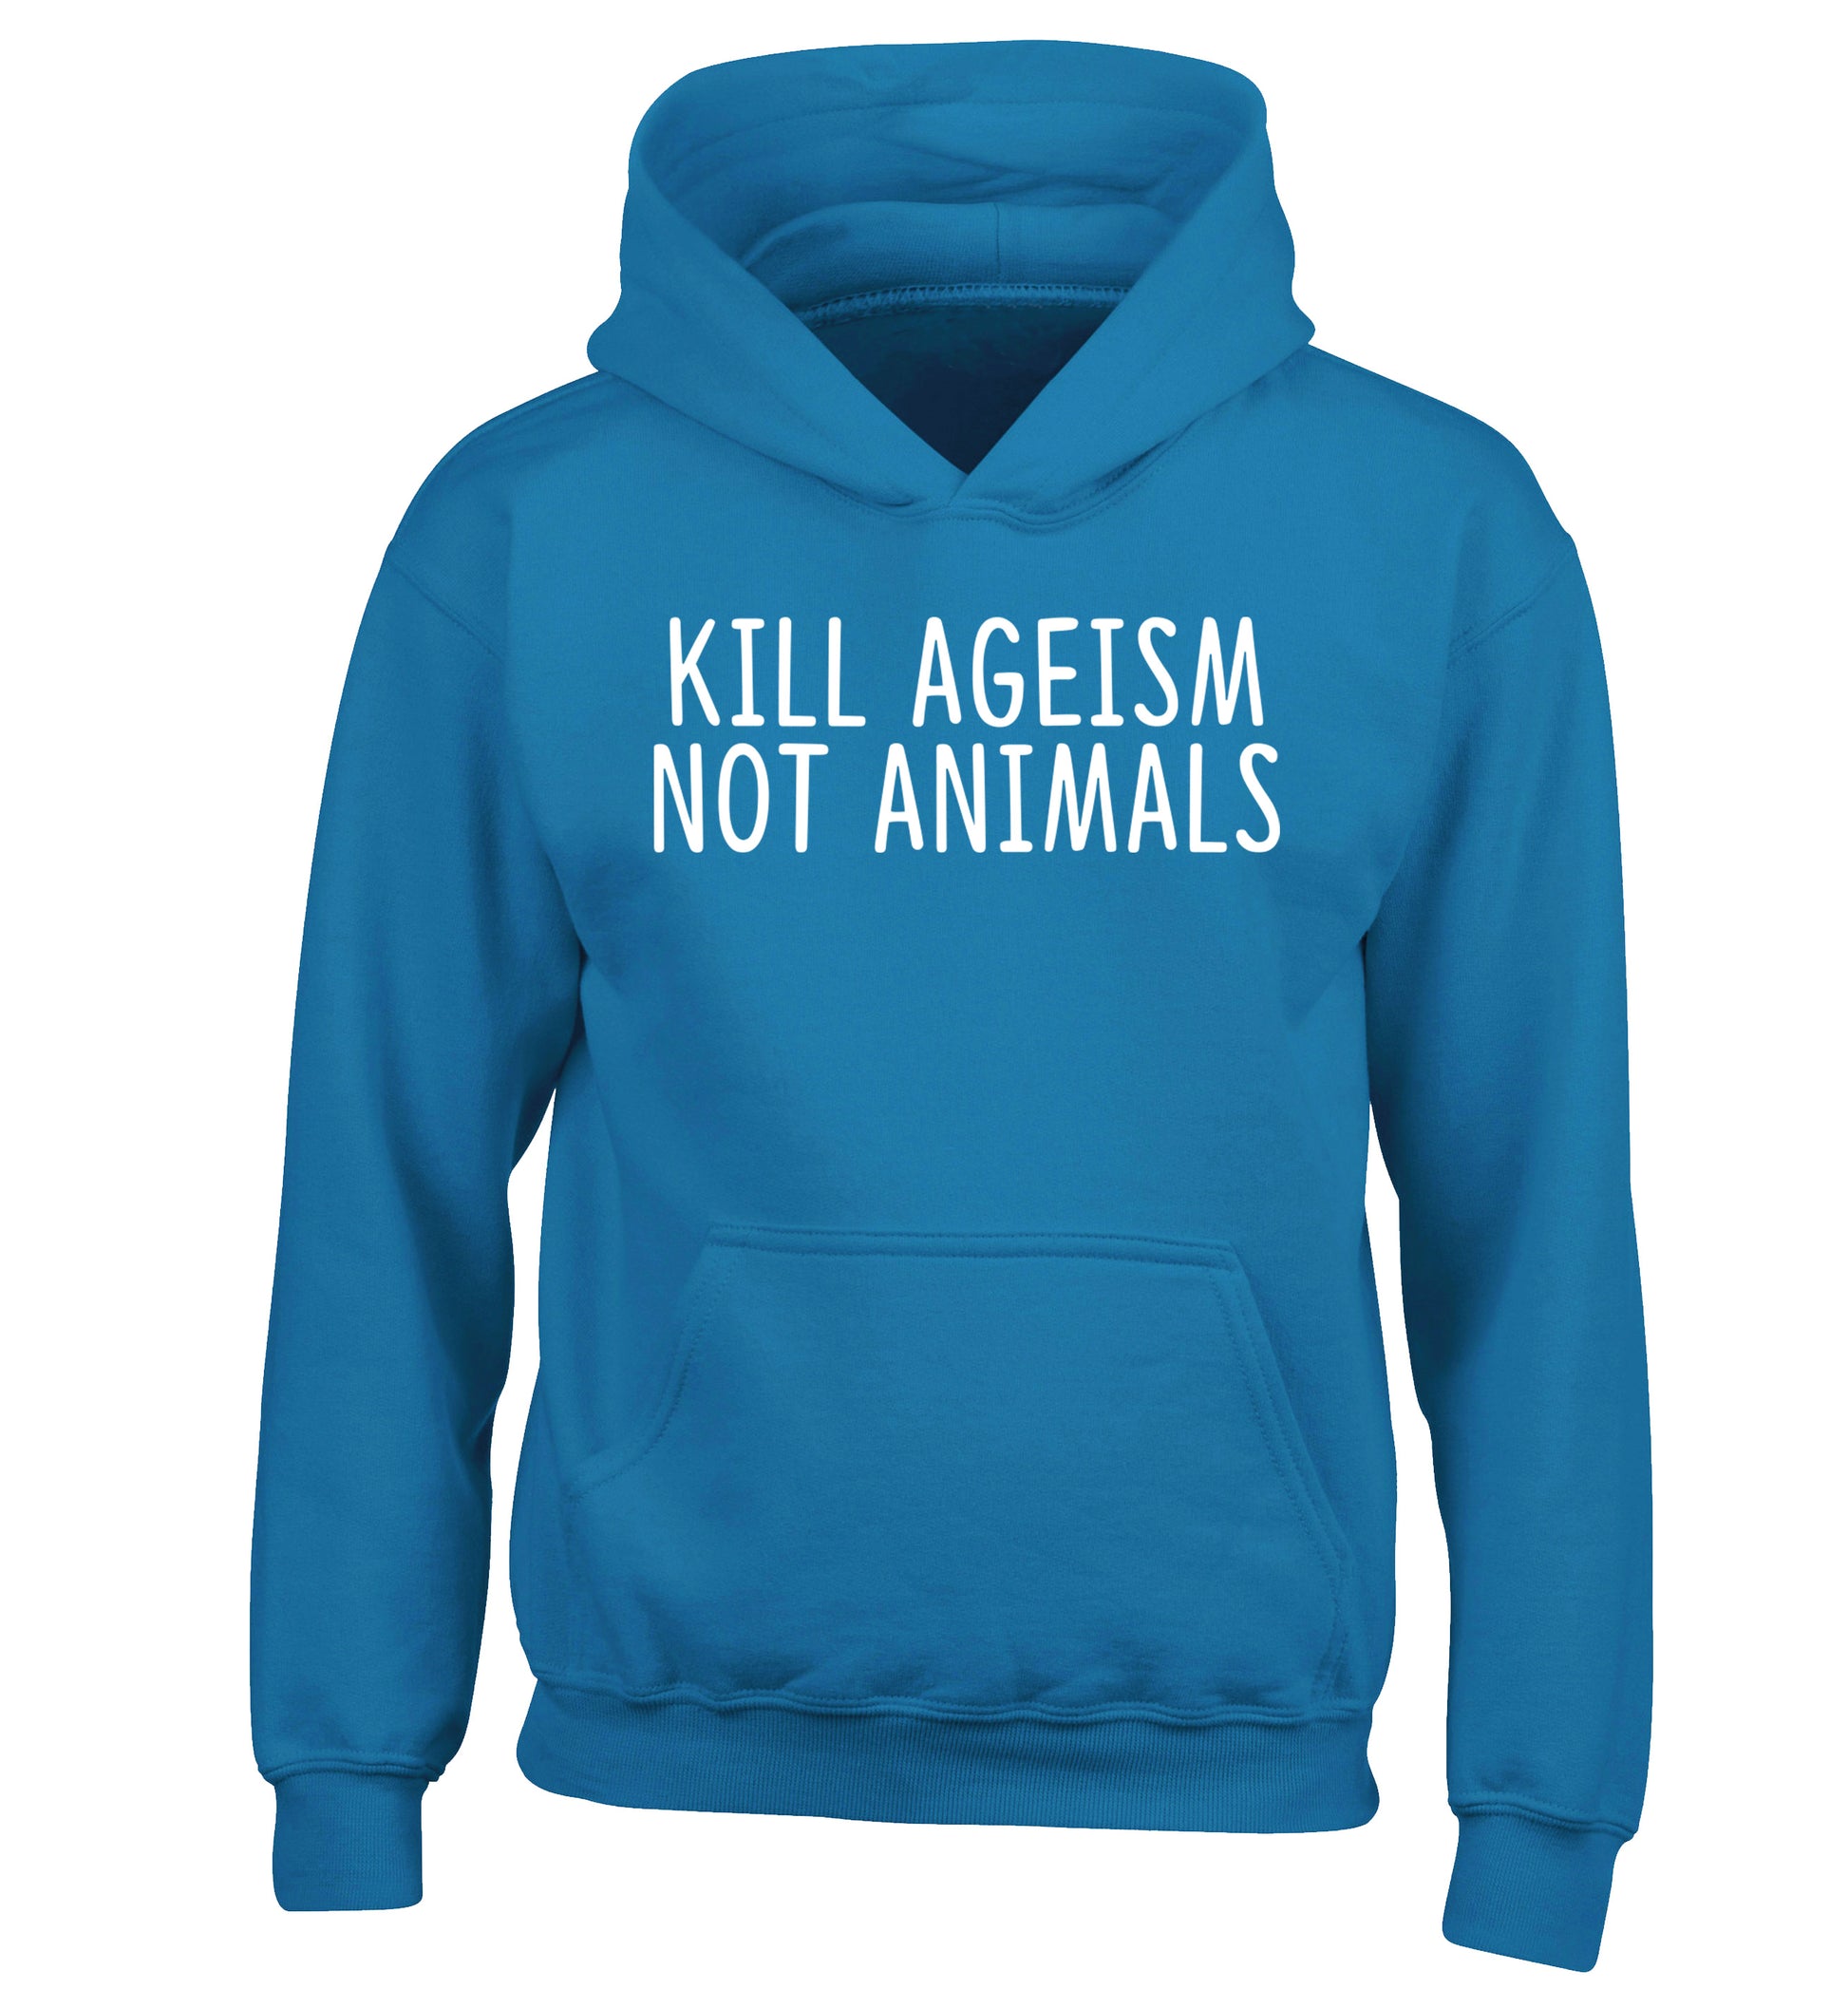 Kill Ageism Not Animals children's blue hoodie 12-13 Years